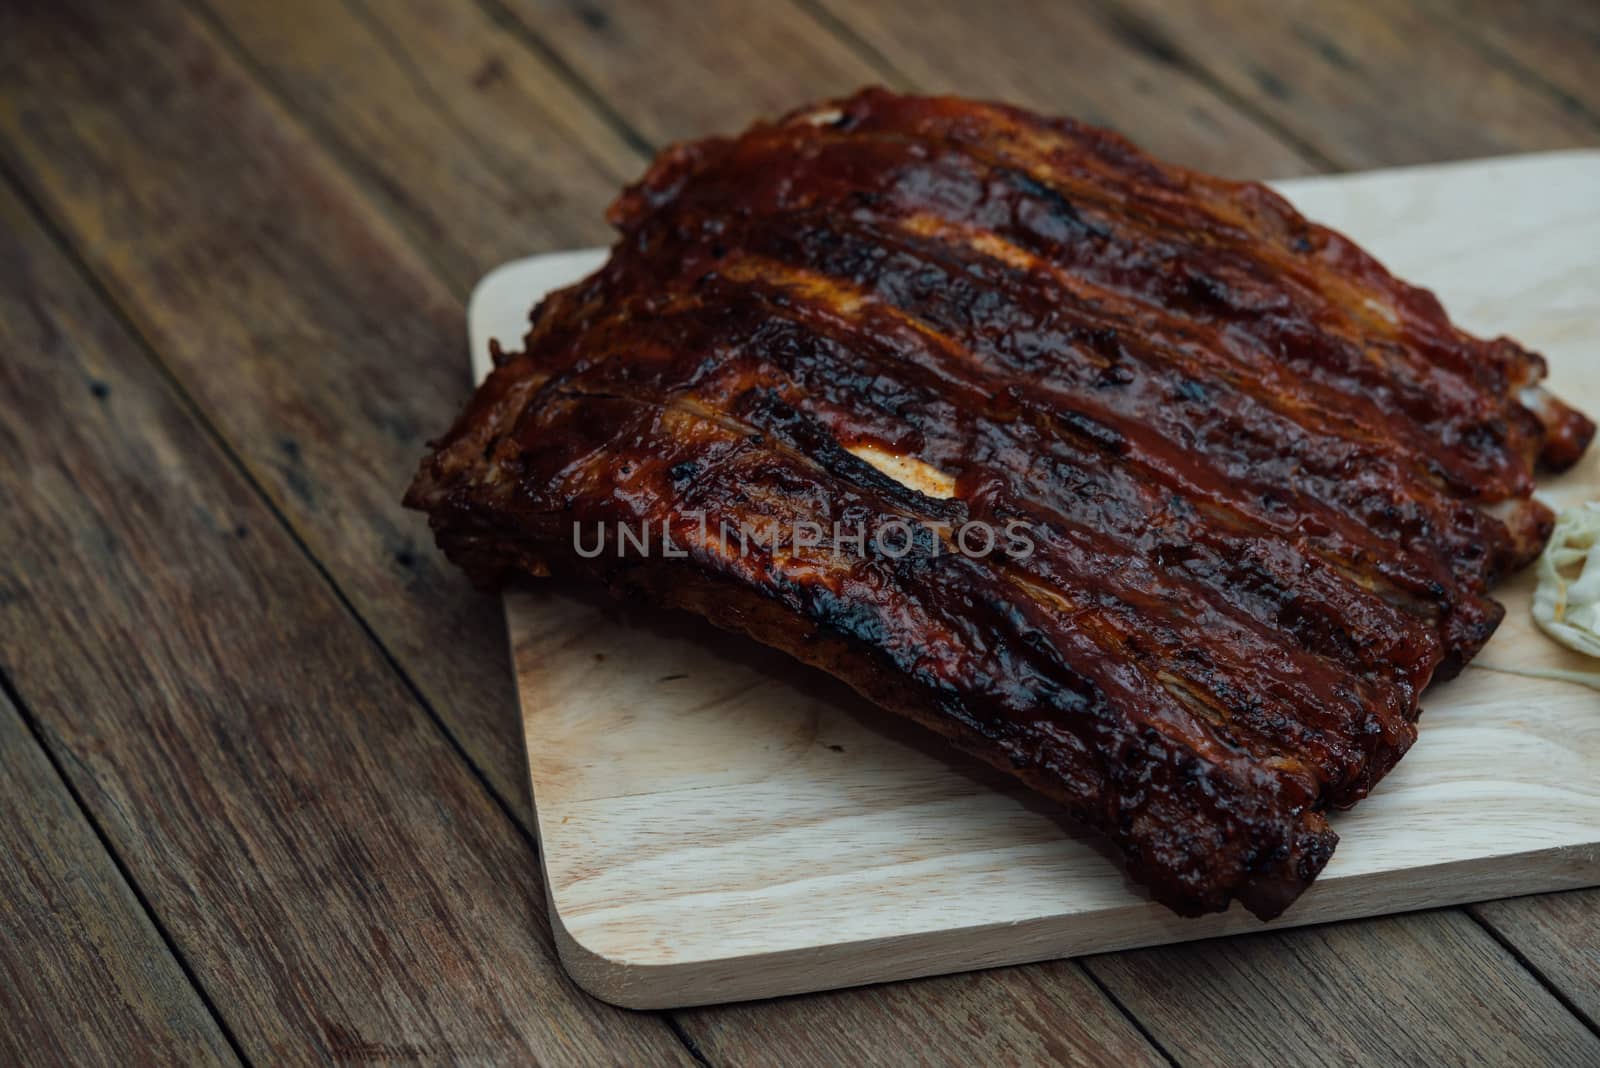 Pork Spare Ribs Barbecue or Pork Ribs with BBQ by PongMoji